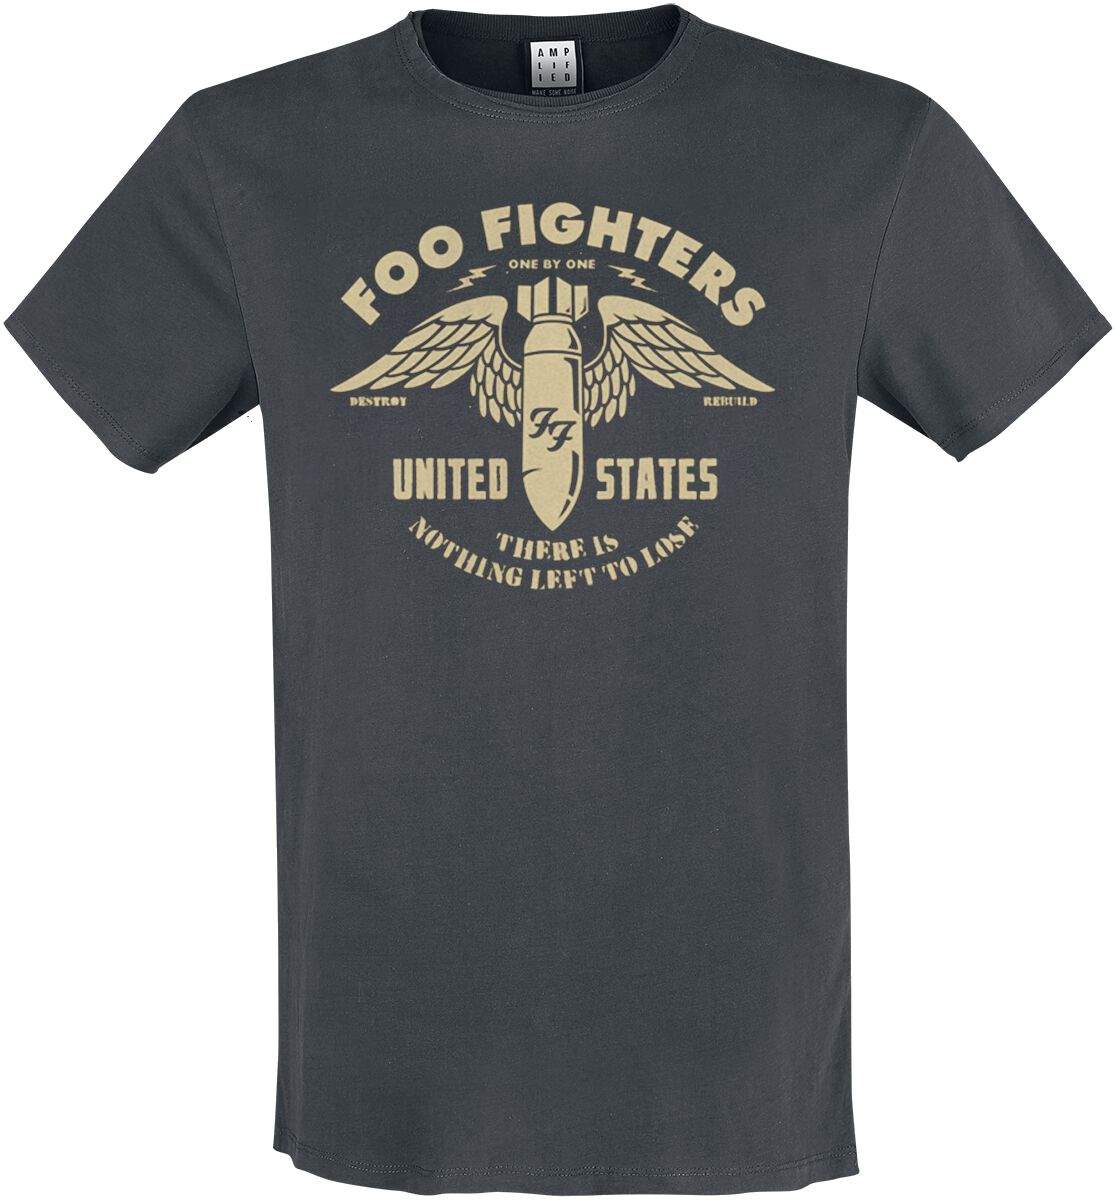 Foo Fighters T-Shirt - Amplified Collection - One By One - S bis 3XL - für Männer - Größe S - charcoal  - Lizenziertes Merchandise!